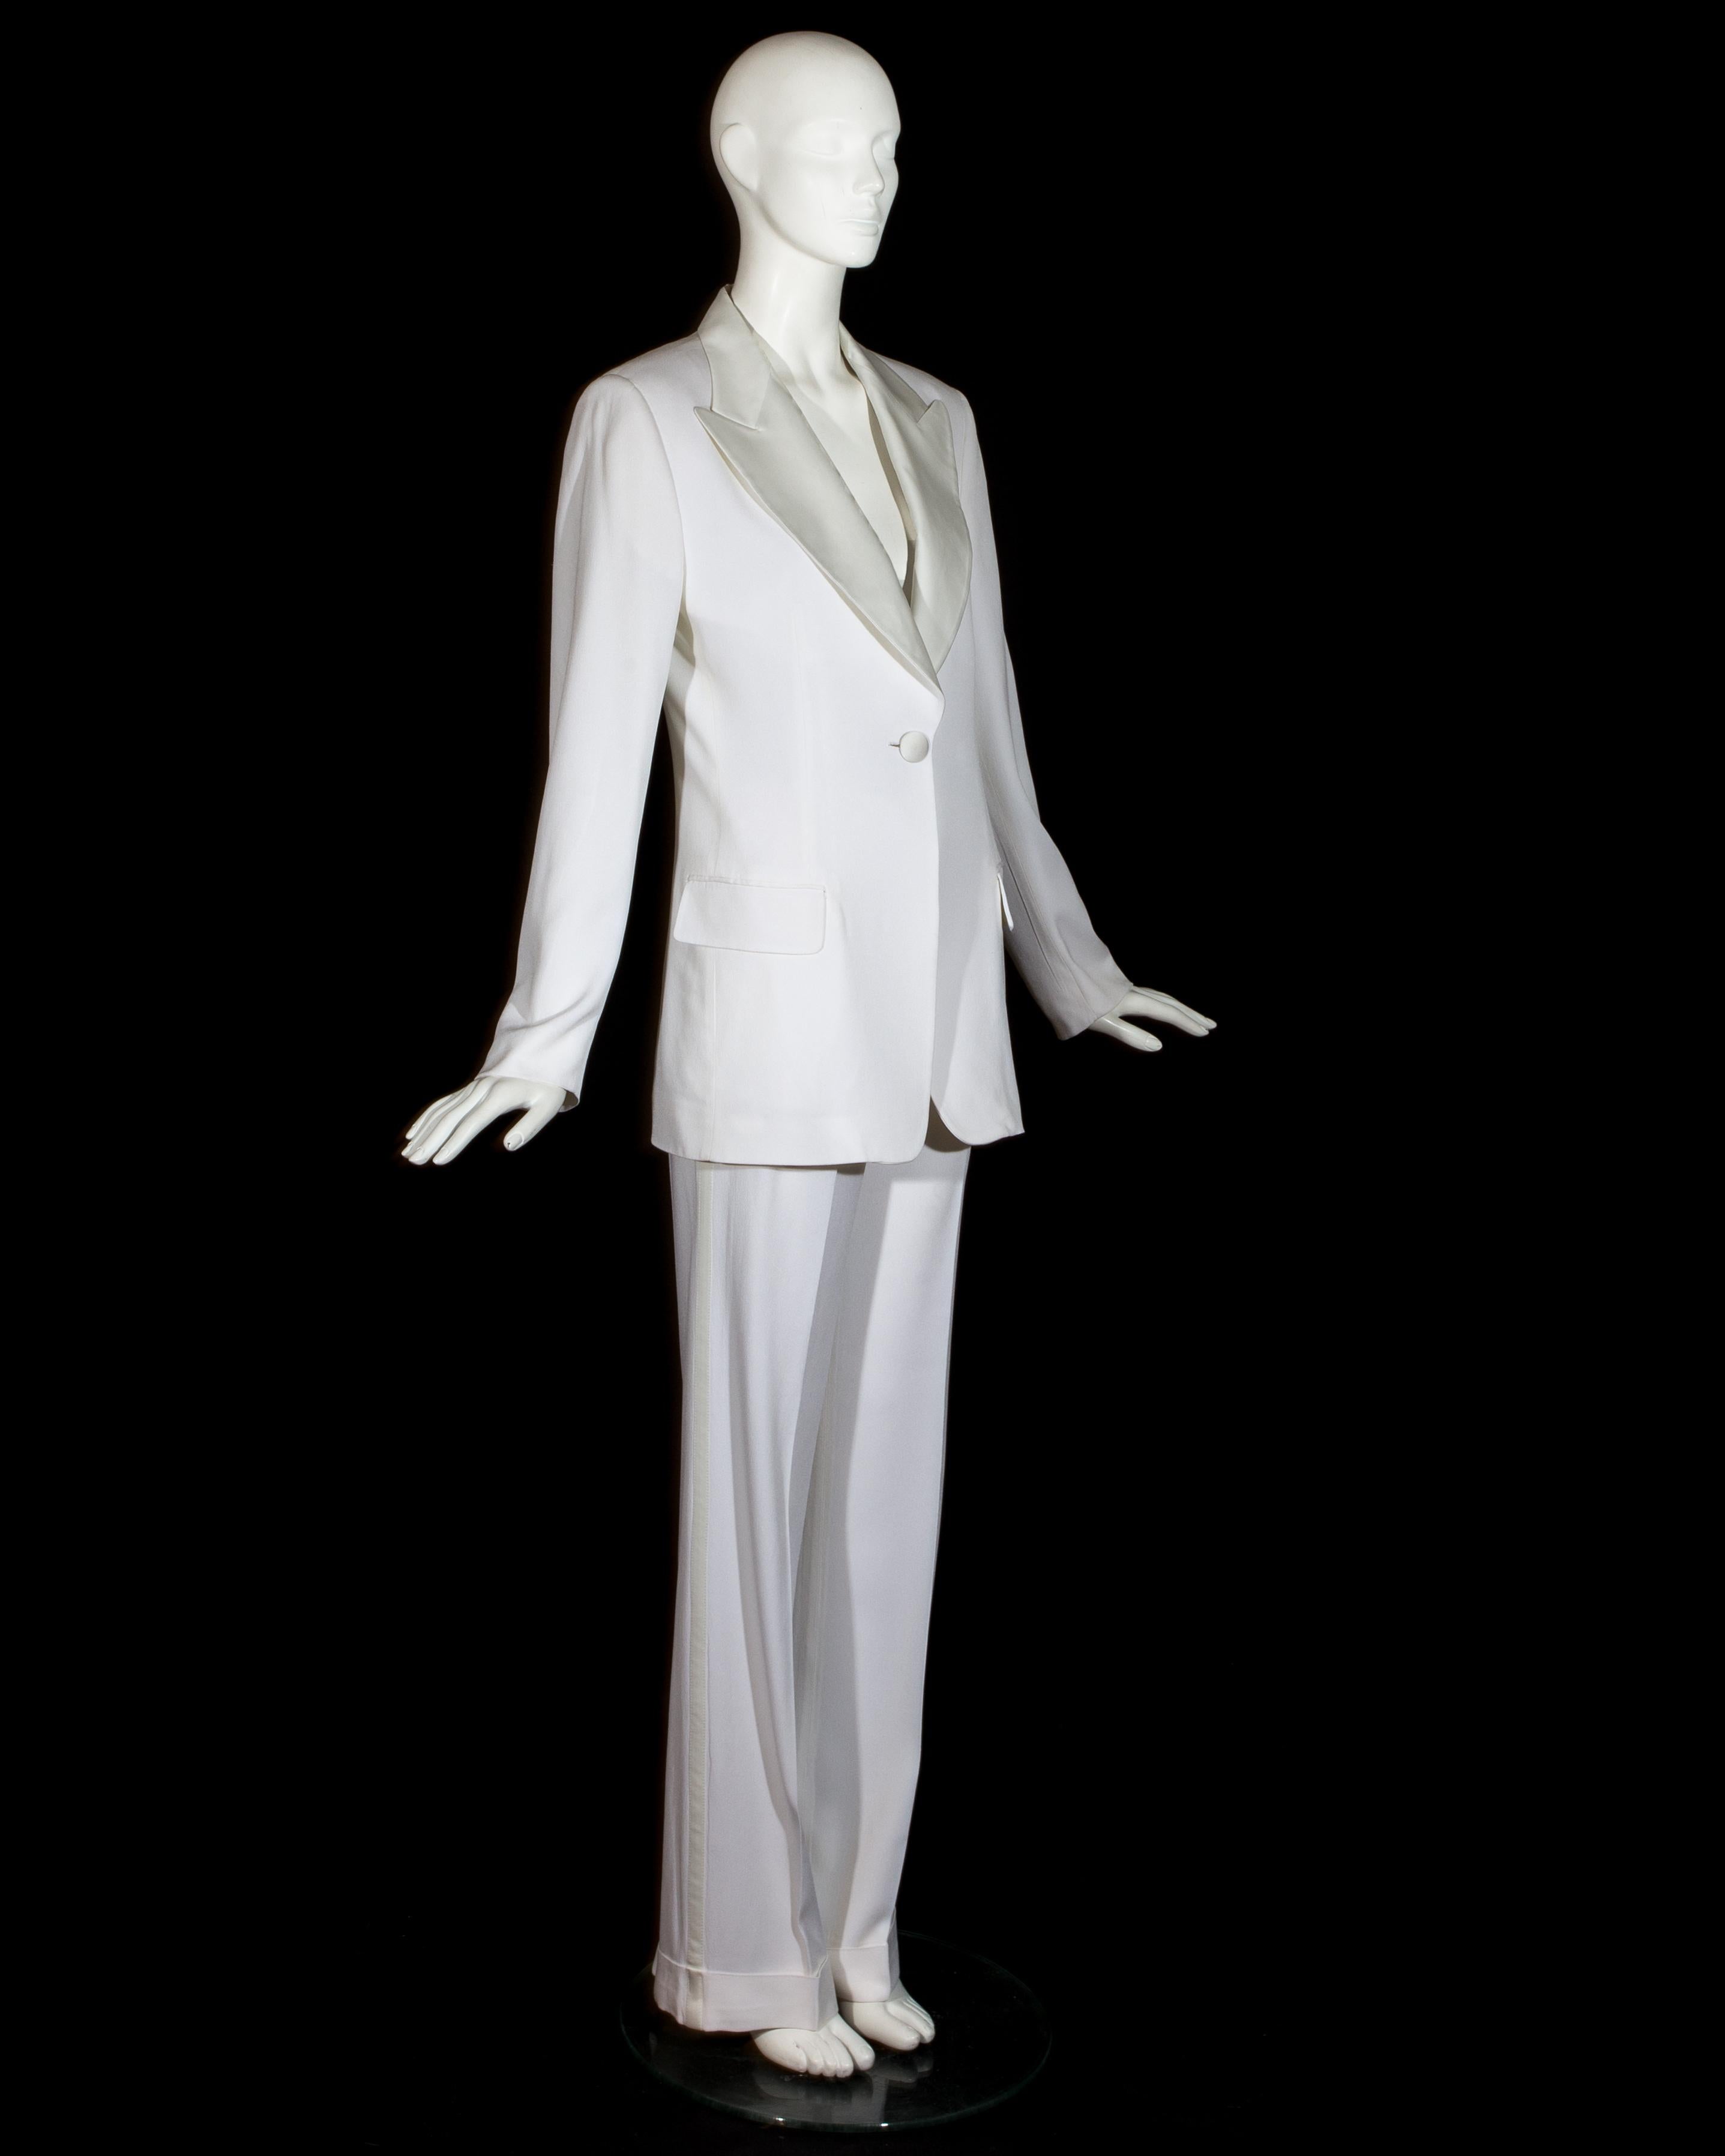 bianca jagger white suit